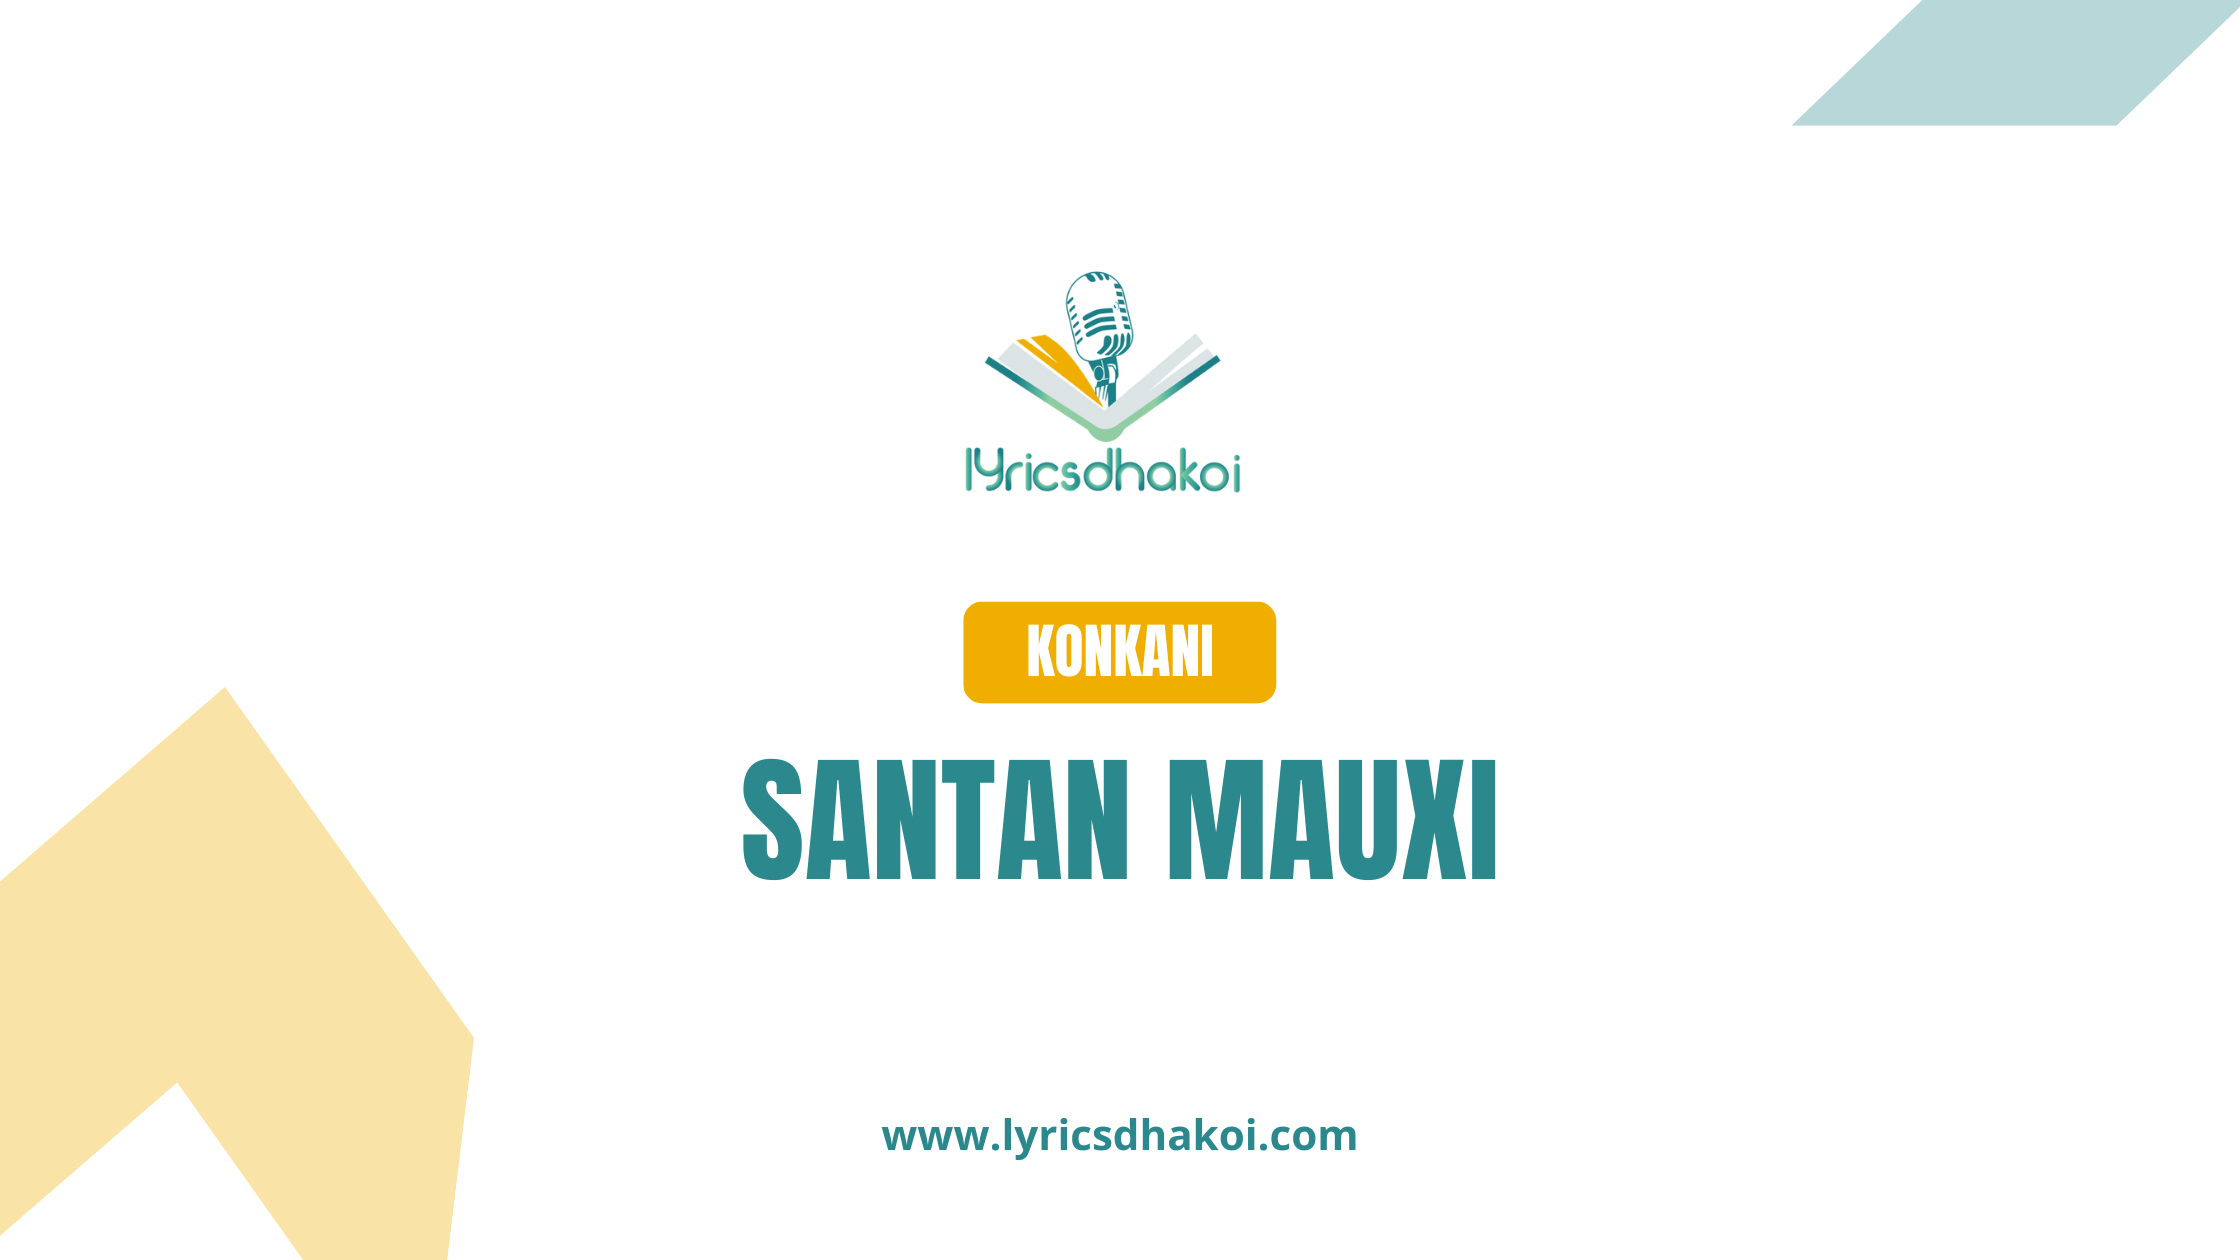 Santan Mauxi Konkani Lyrics for Karaoke Online - LyricsDhakoi.com